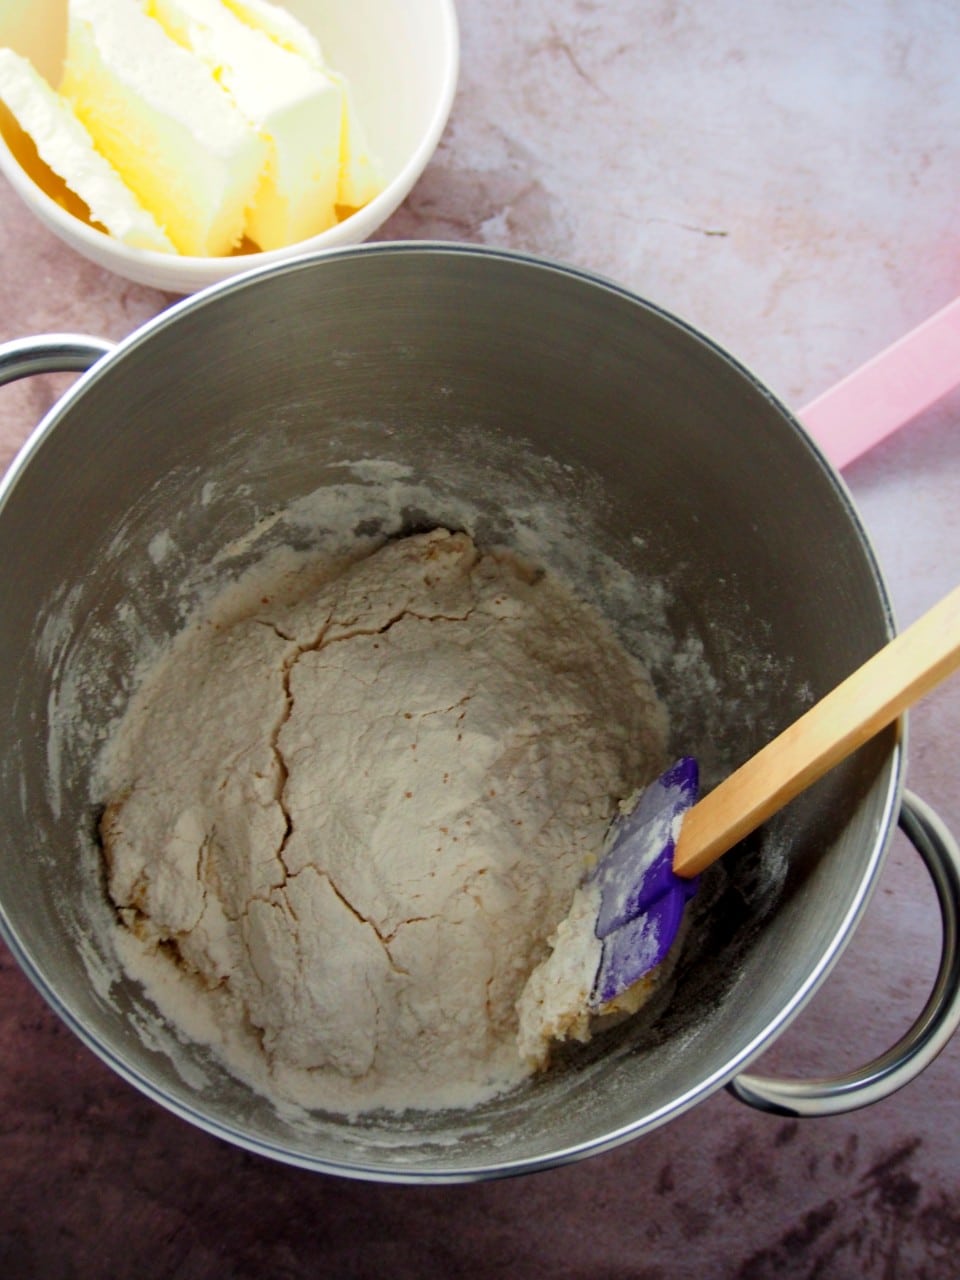 The brioche sponge with flour cracks on tops.